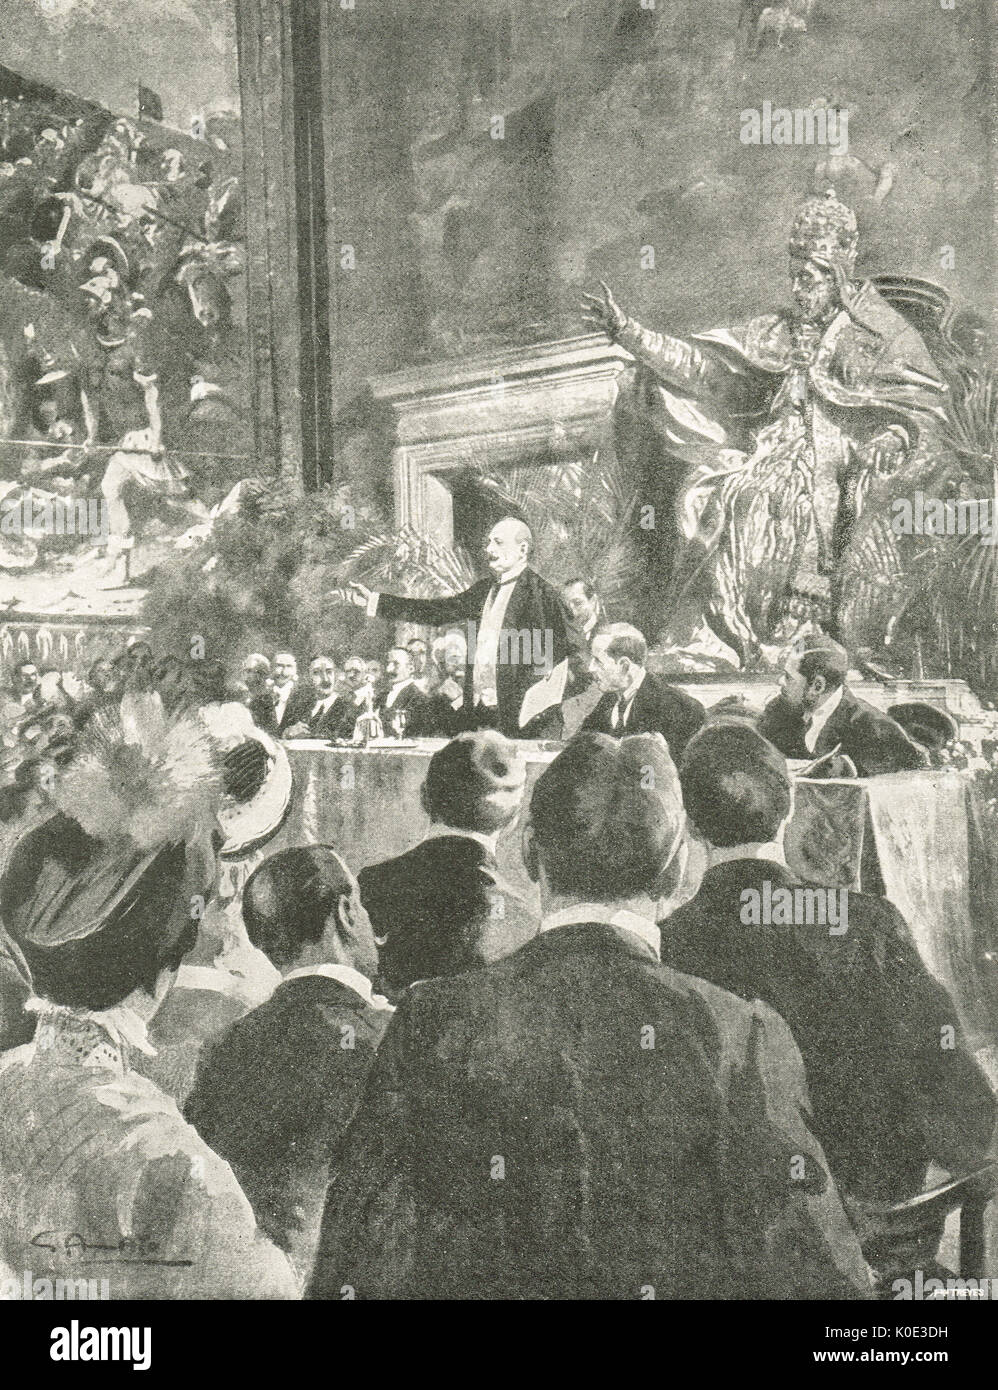 Antonio Salandra discours de guerre, 1915, WW1 Banque D'Images